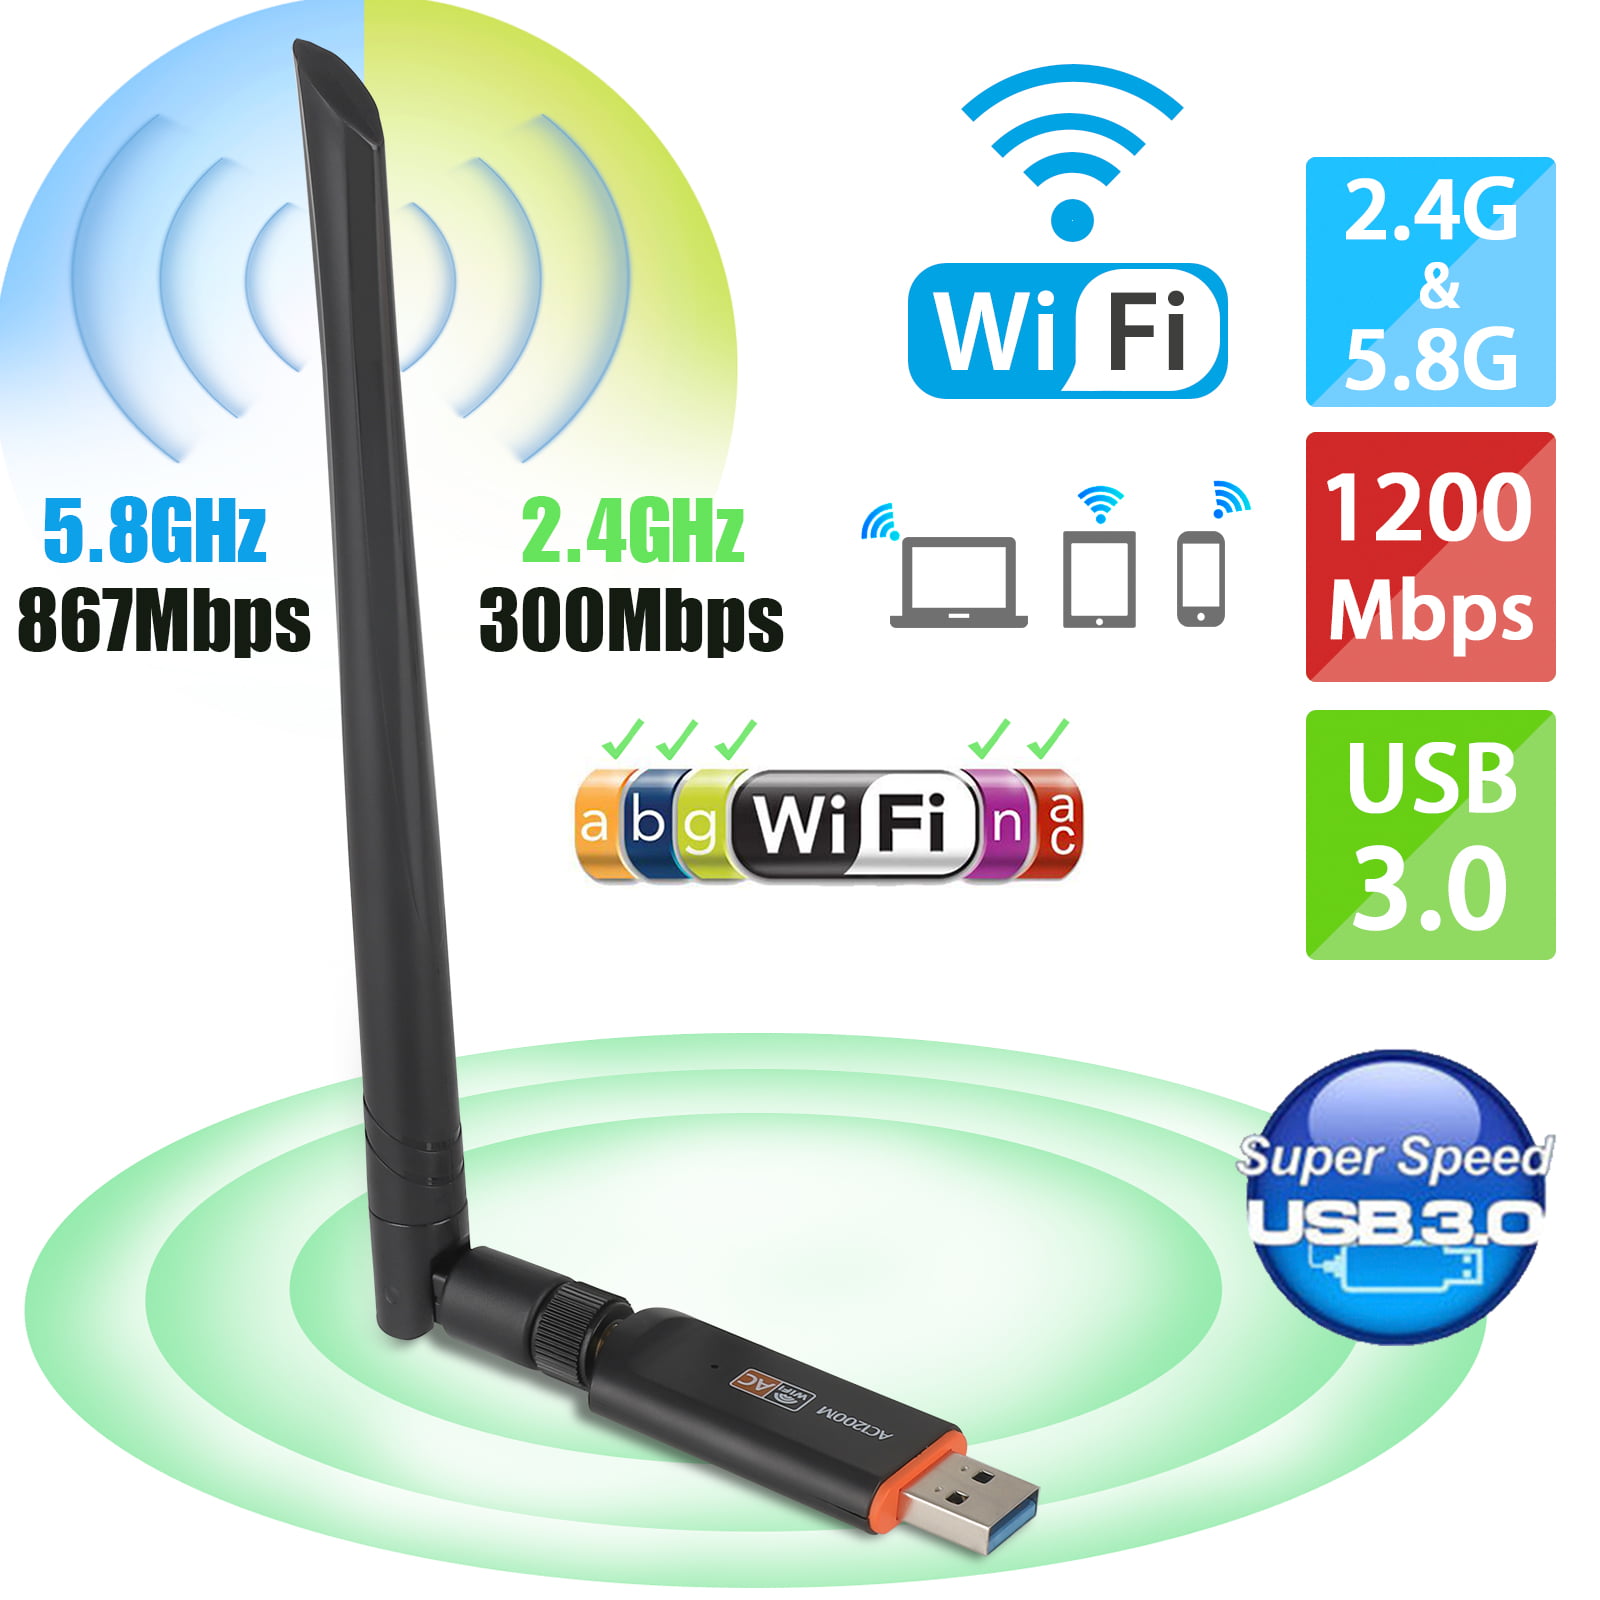 AMBOLOVE AC600Mbps Dual Band 2.4G/5G WiFi Dongle 802.11n/g/b Wireless Network LAN Card Adapter for PC Desktop Laptop Support Windows 10/8.1/8/7/XP/Vista/Mac OS/Linux WiFi USB Adapter 5dBi Antenna 